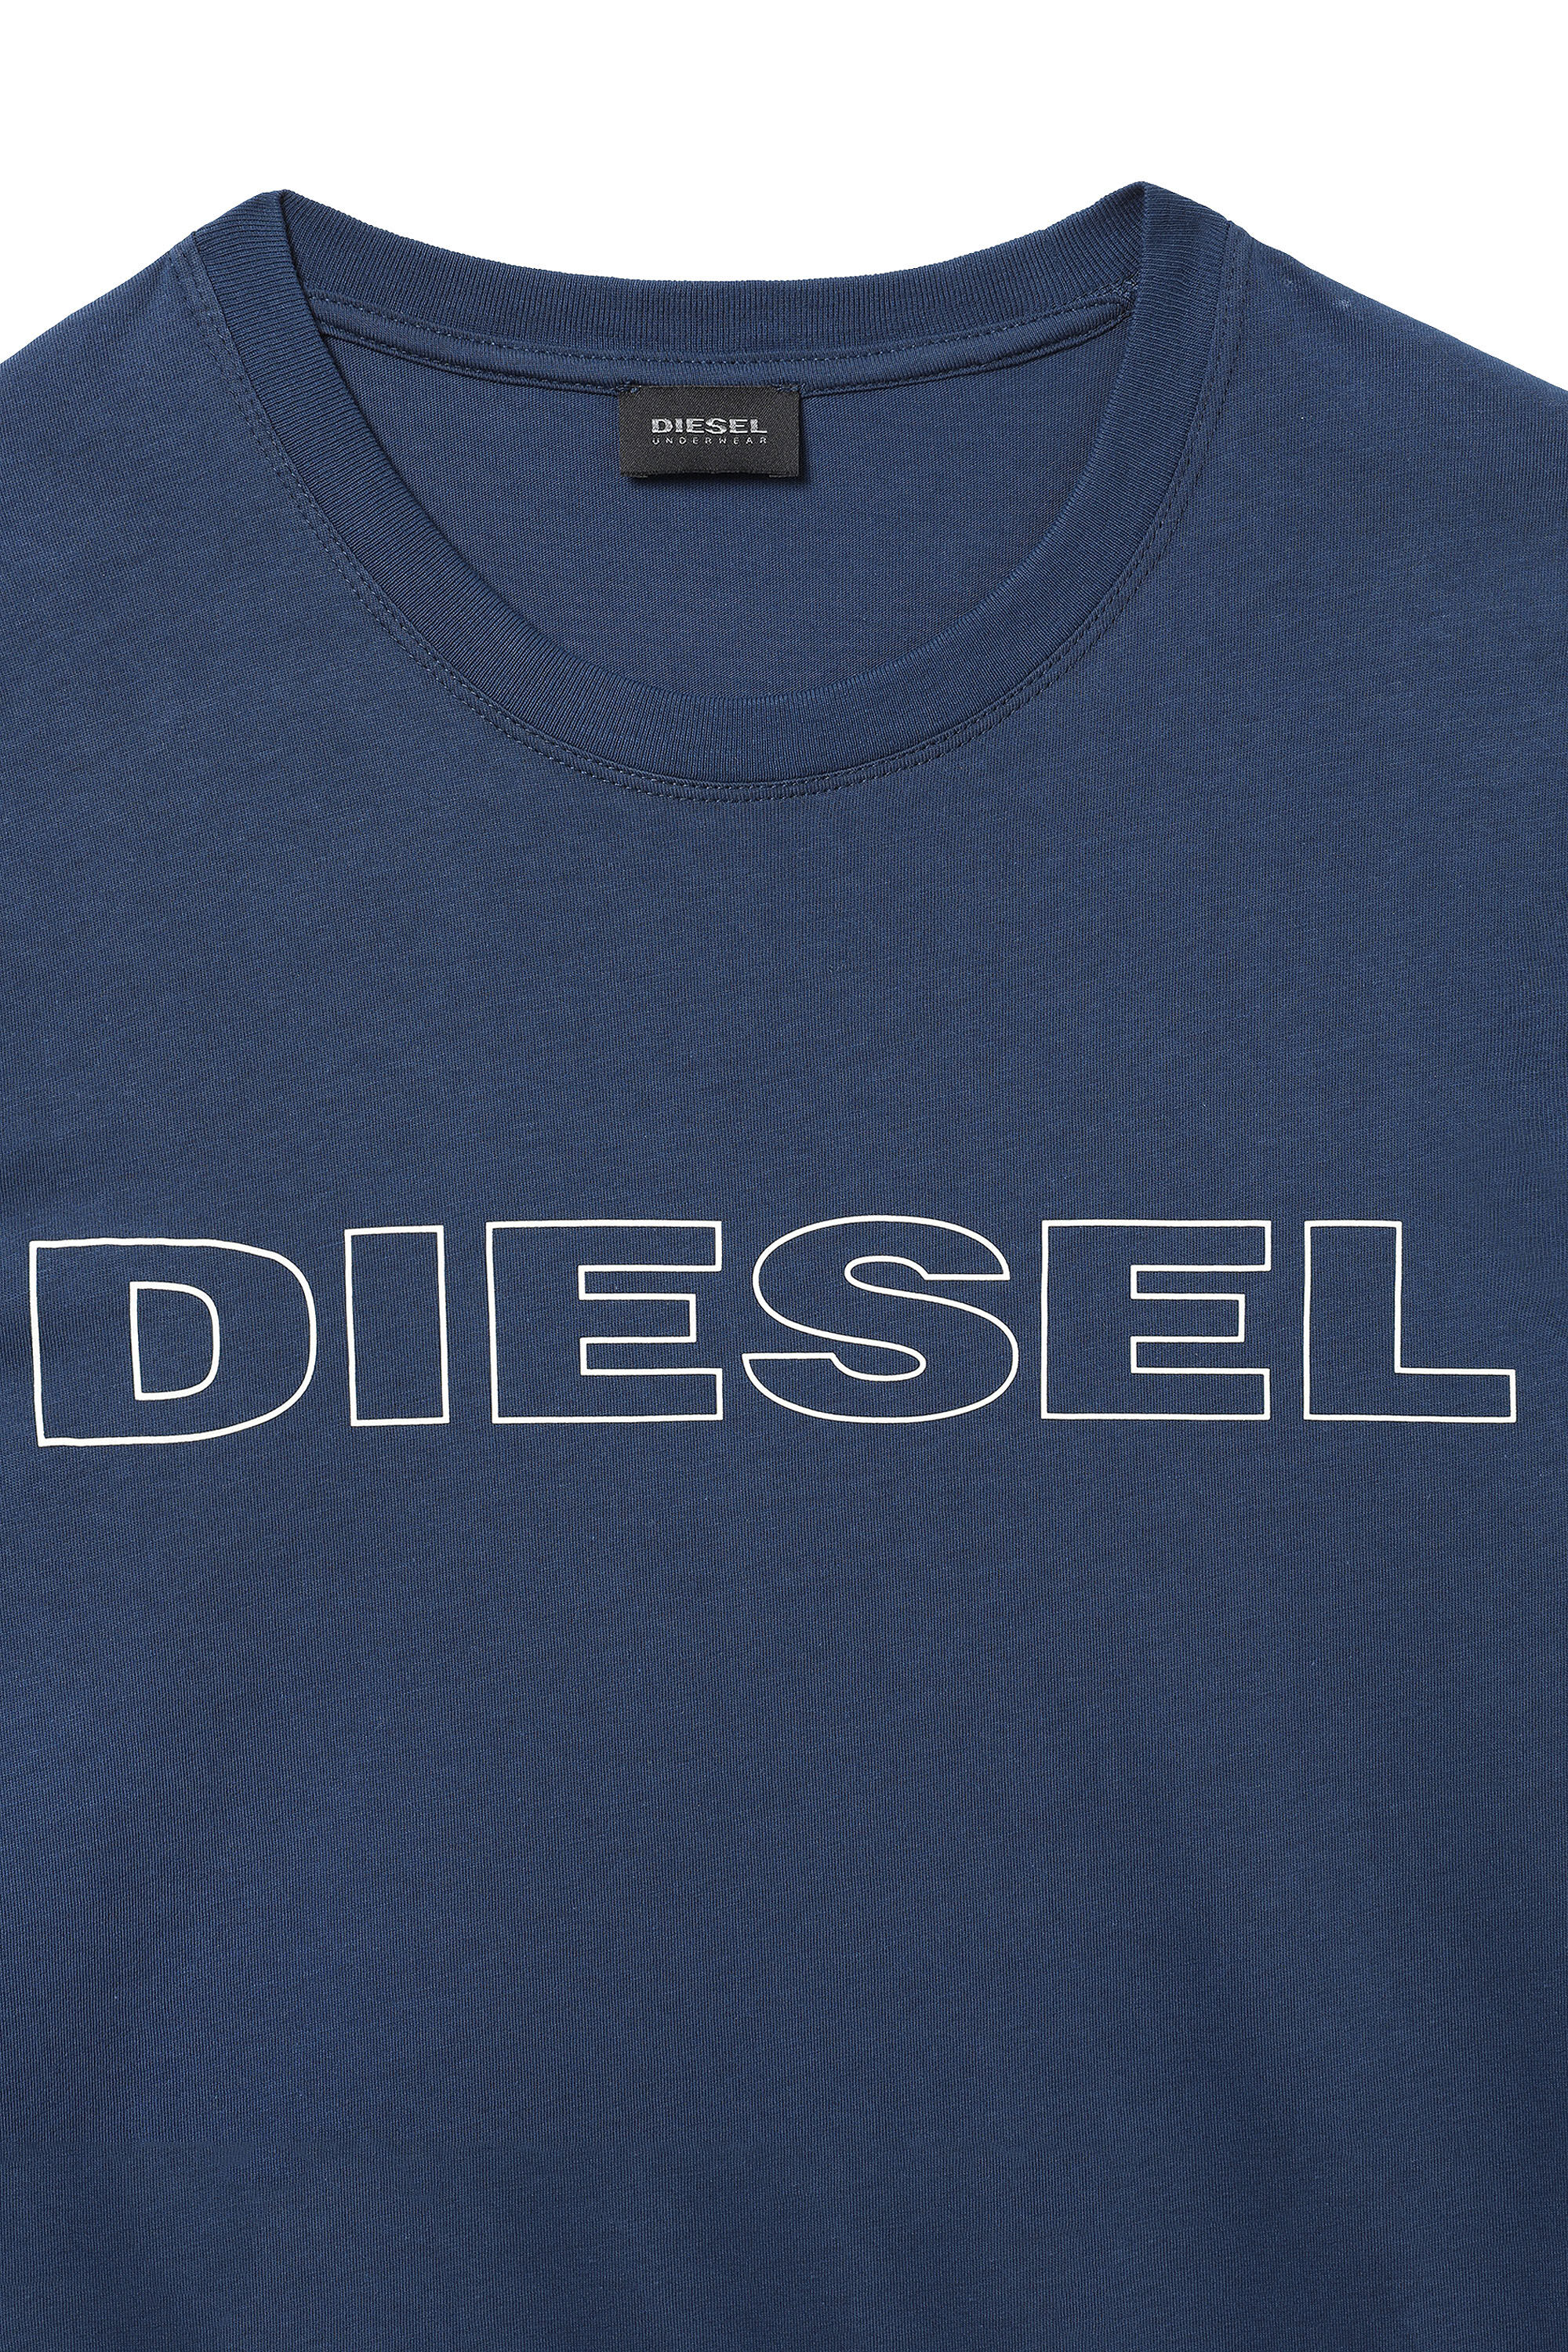 Diesel - UMLT-JAKE, Night Blue - Image 2